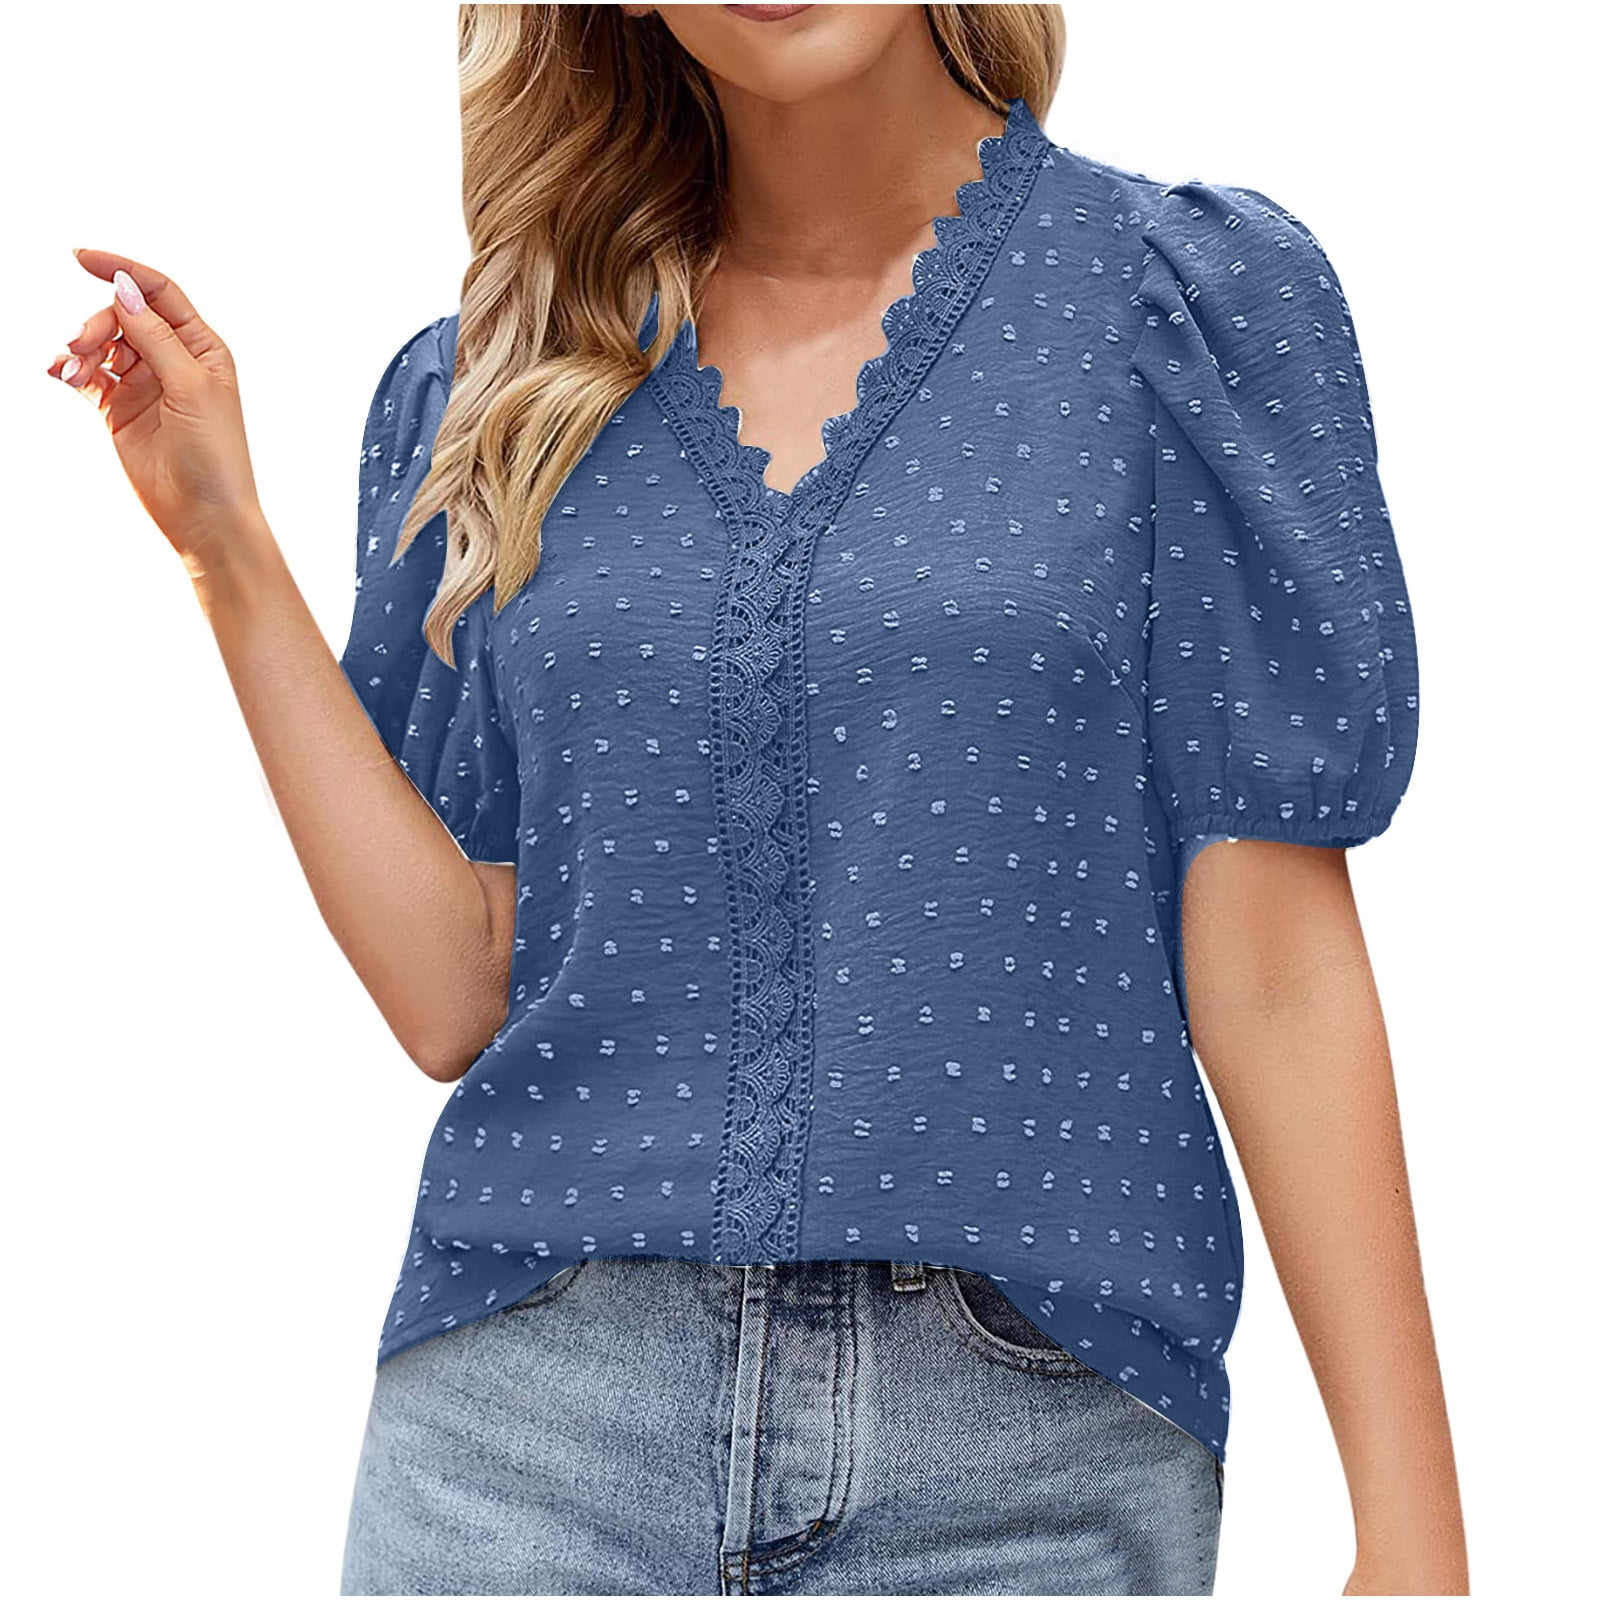 RYRJJ Reduce Price Blouses for Women Casual Summer Tops Lace Trim V Neck  Short Sleeve Shirts Dressy Chiffon Swiss Dot Office Work Shirt(Pink,XL) 